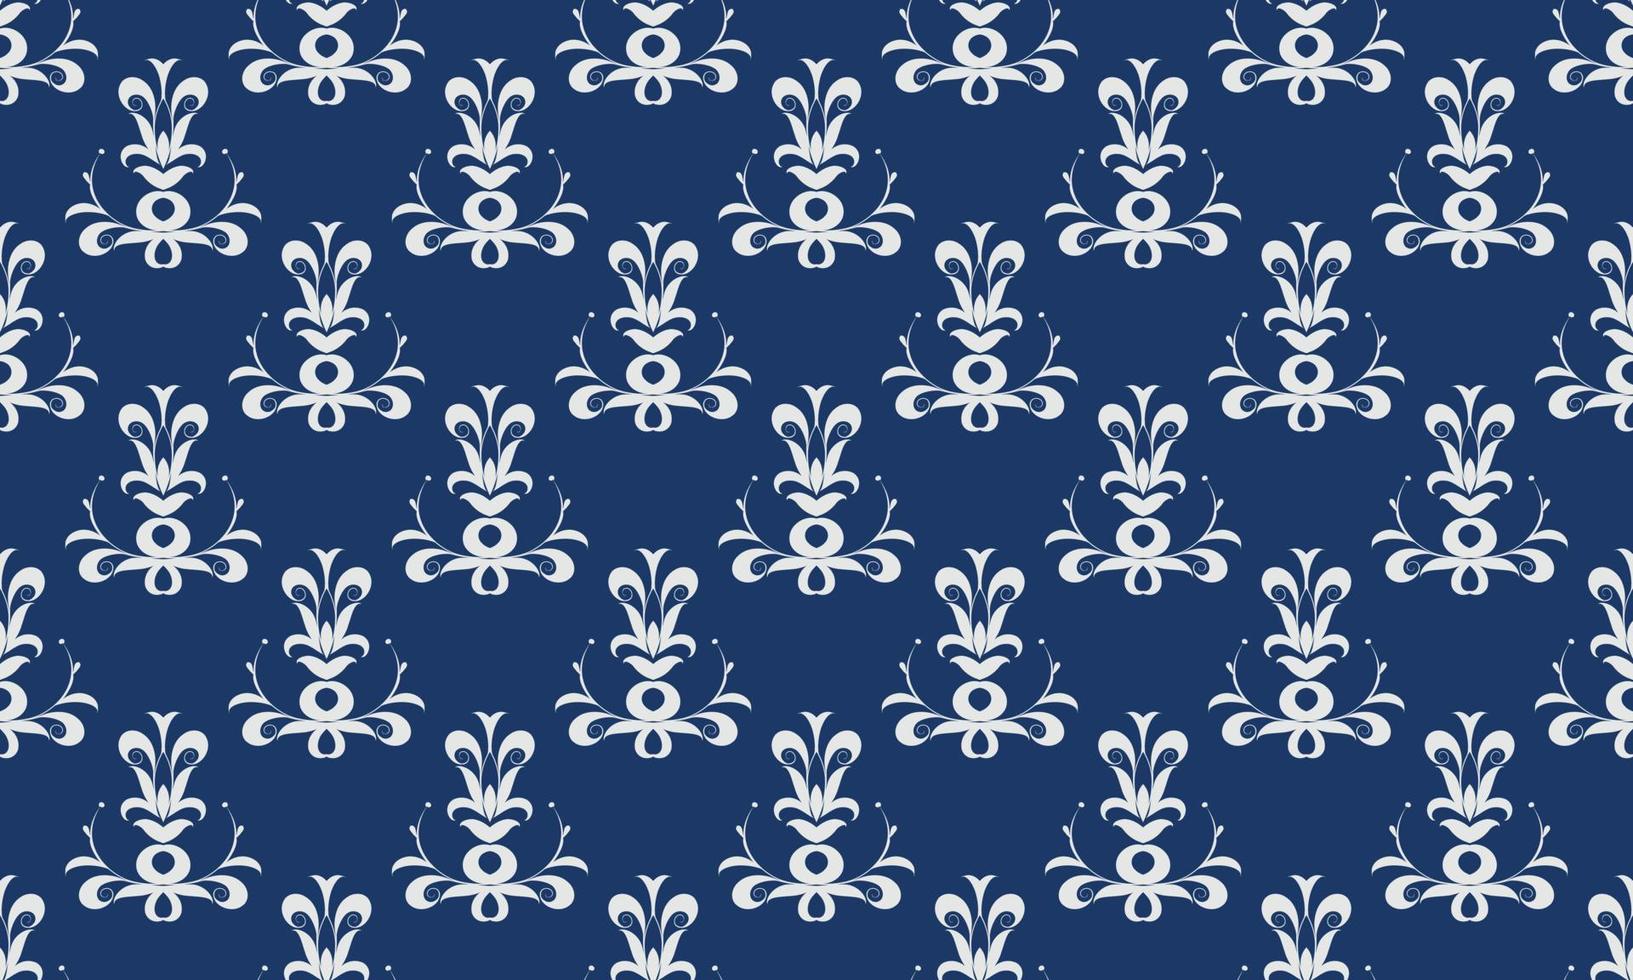 Damask Fleur de Lis pattern fabric vector seamless background wallpaper Fleur de Lis pattern African Digital texture Design for print printable fabric saree border.